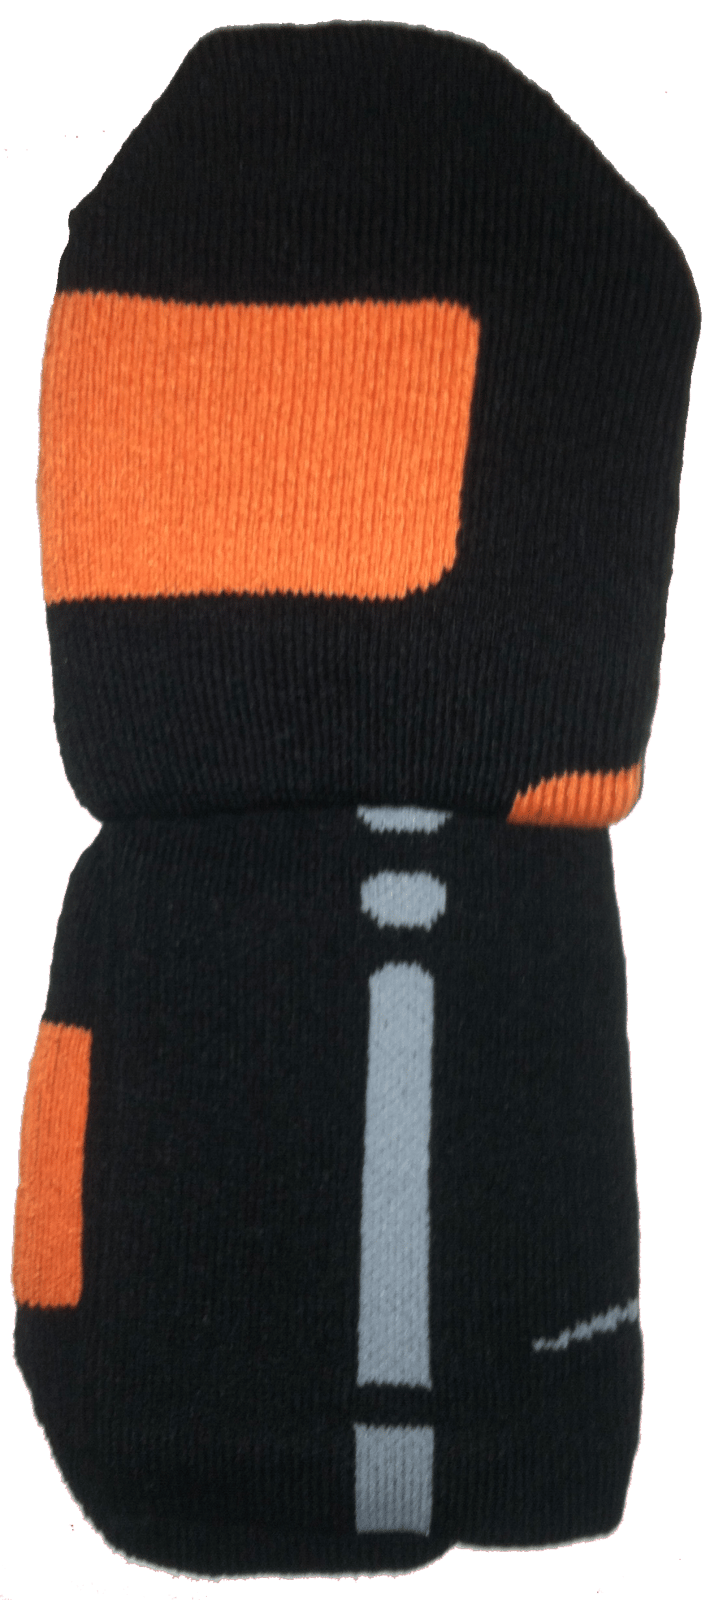 original nike elite socks